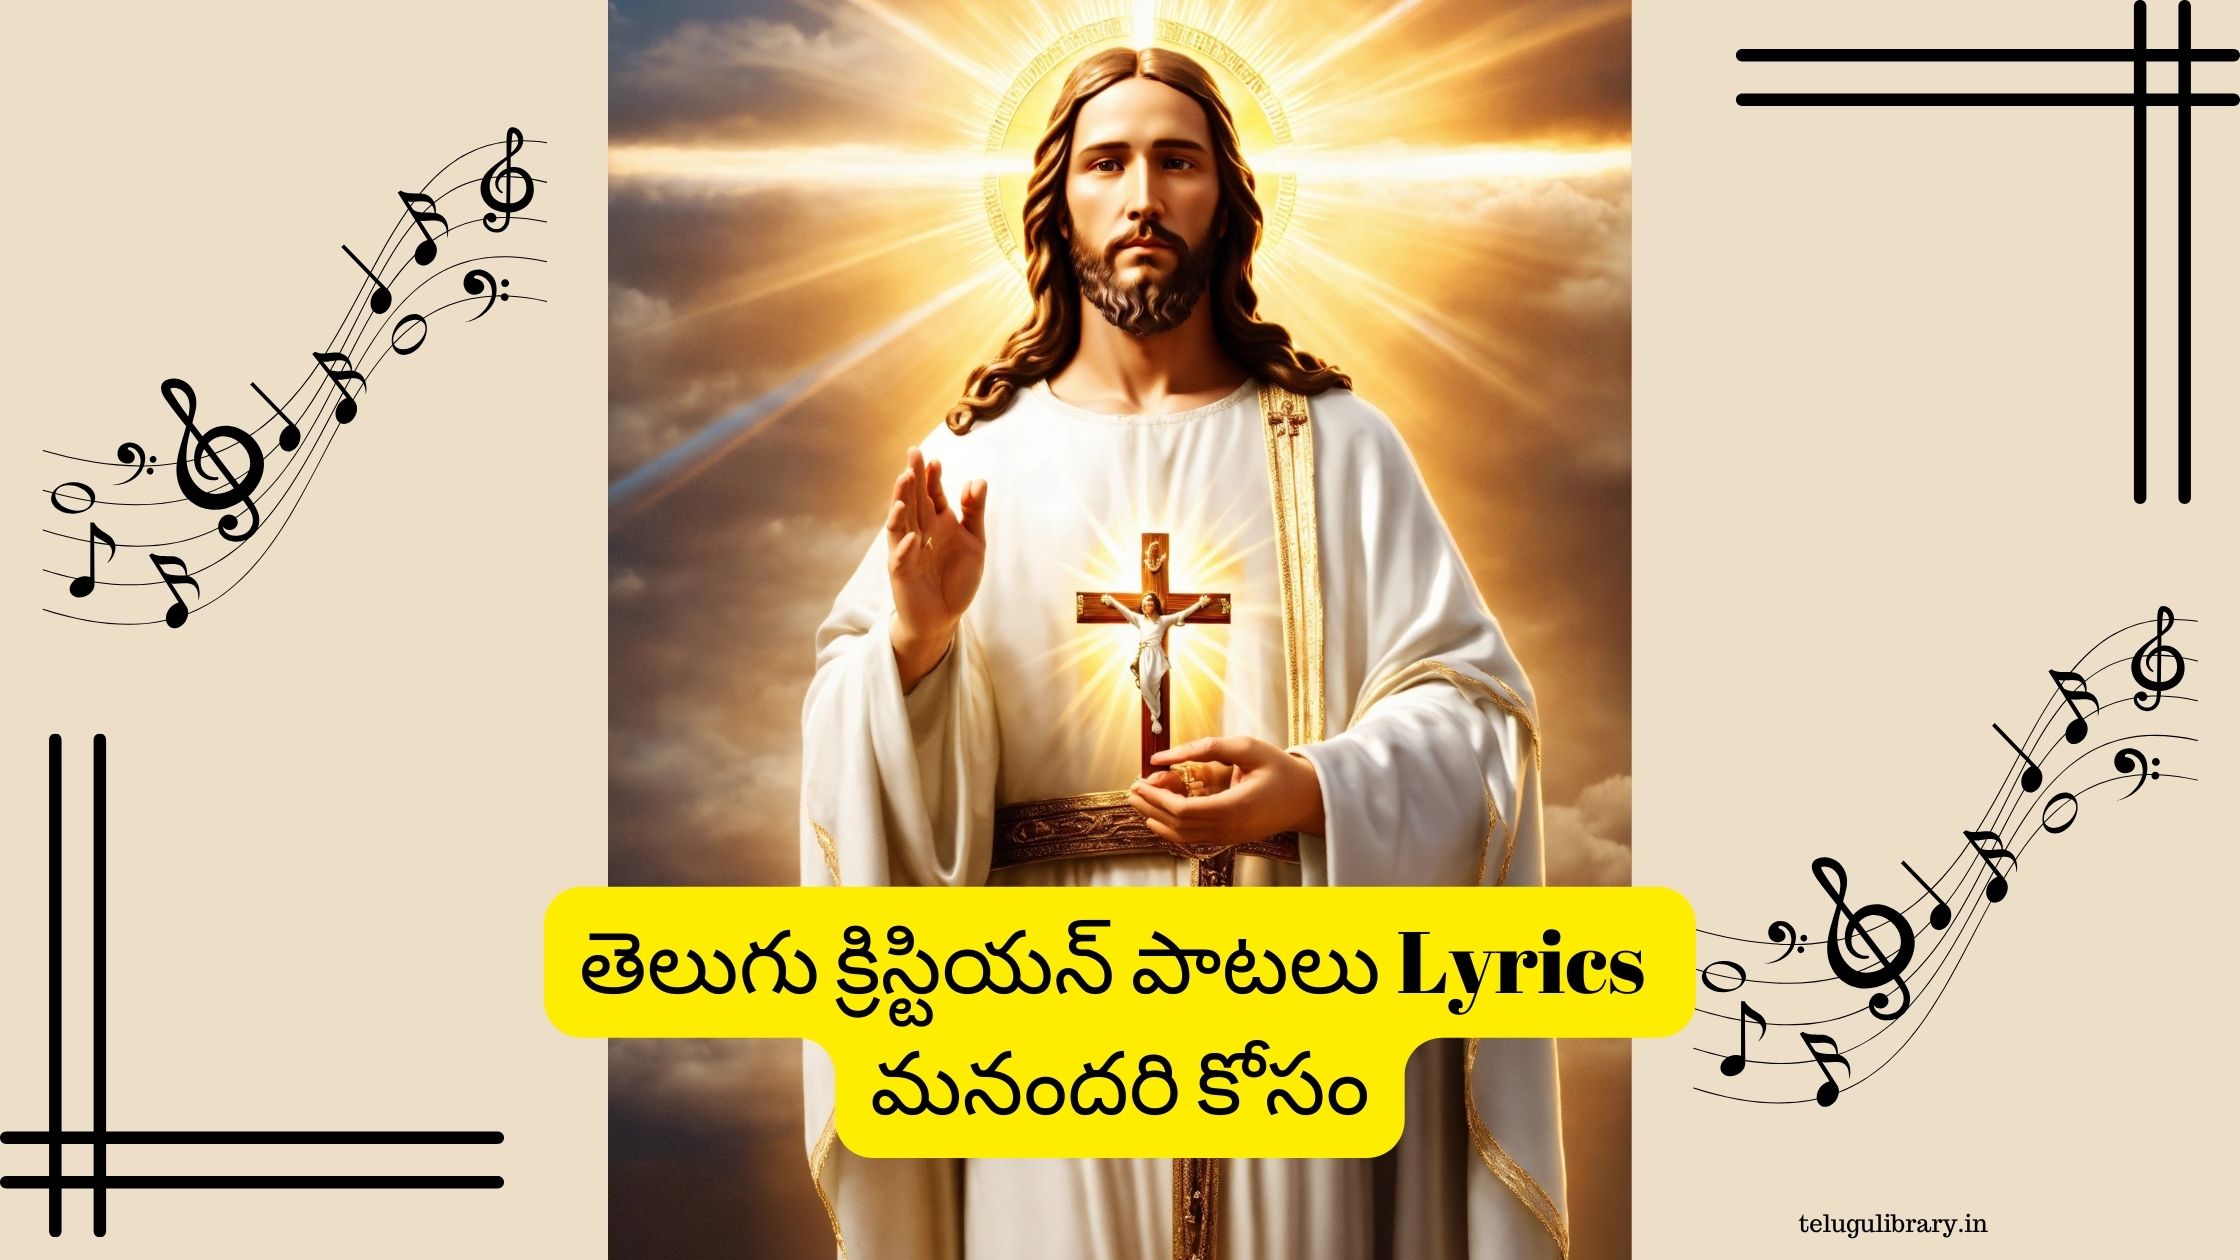 Telugu Christian songs Lyrics